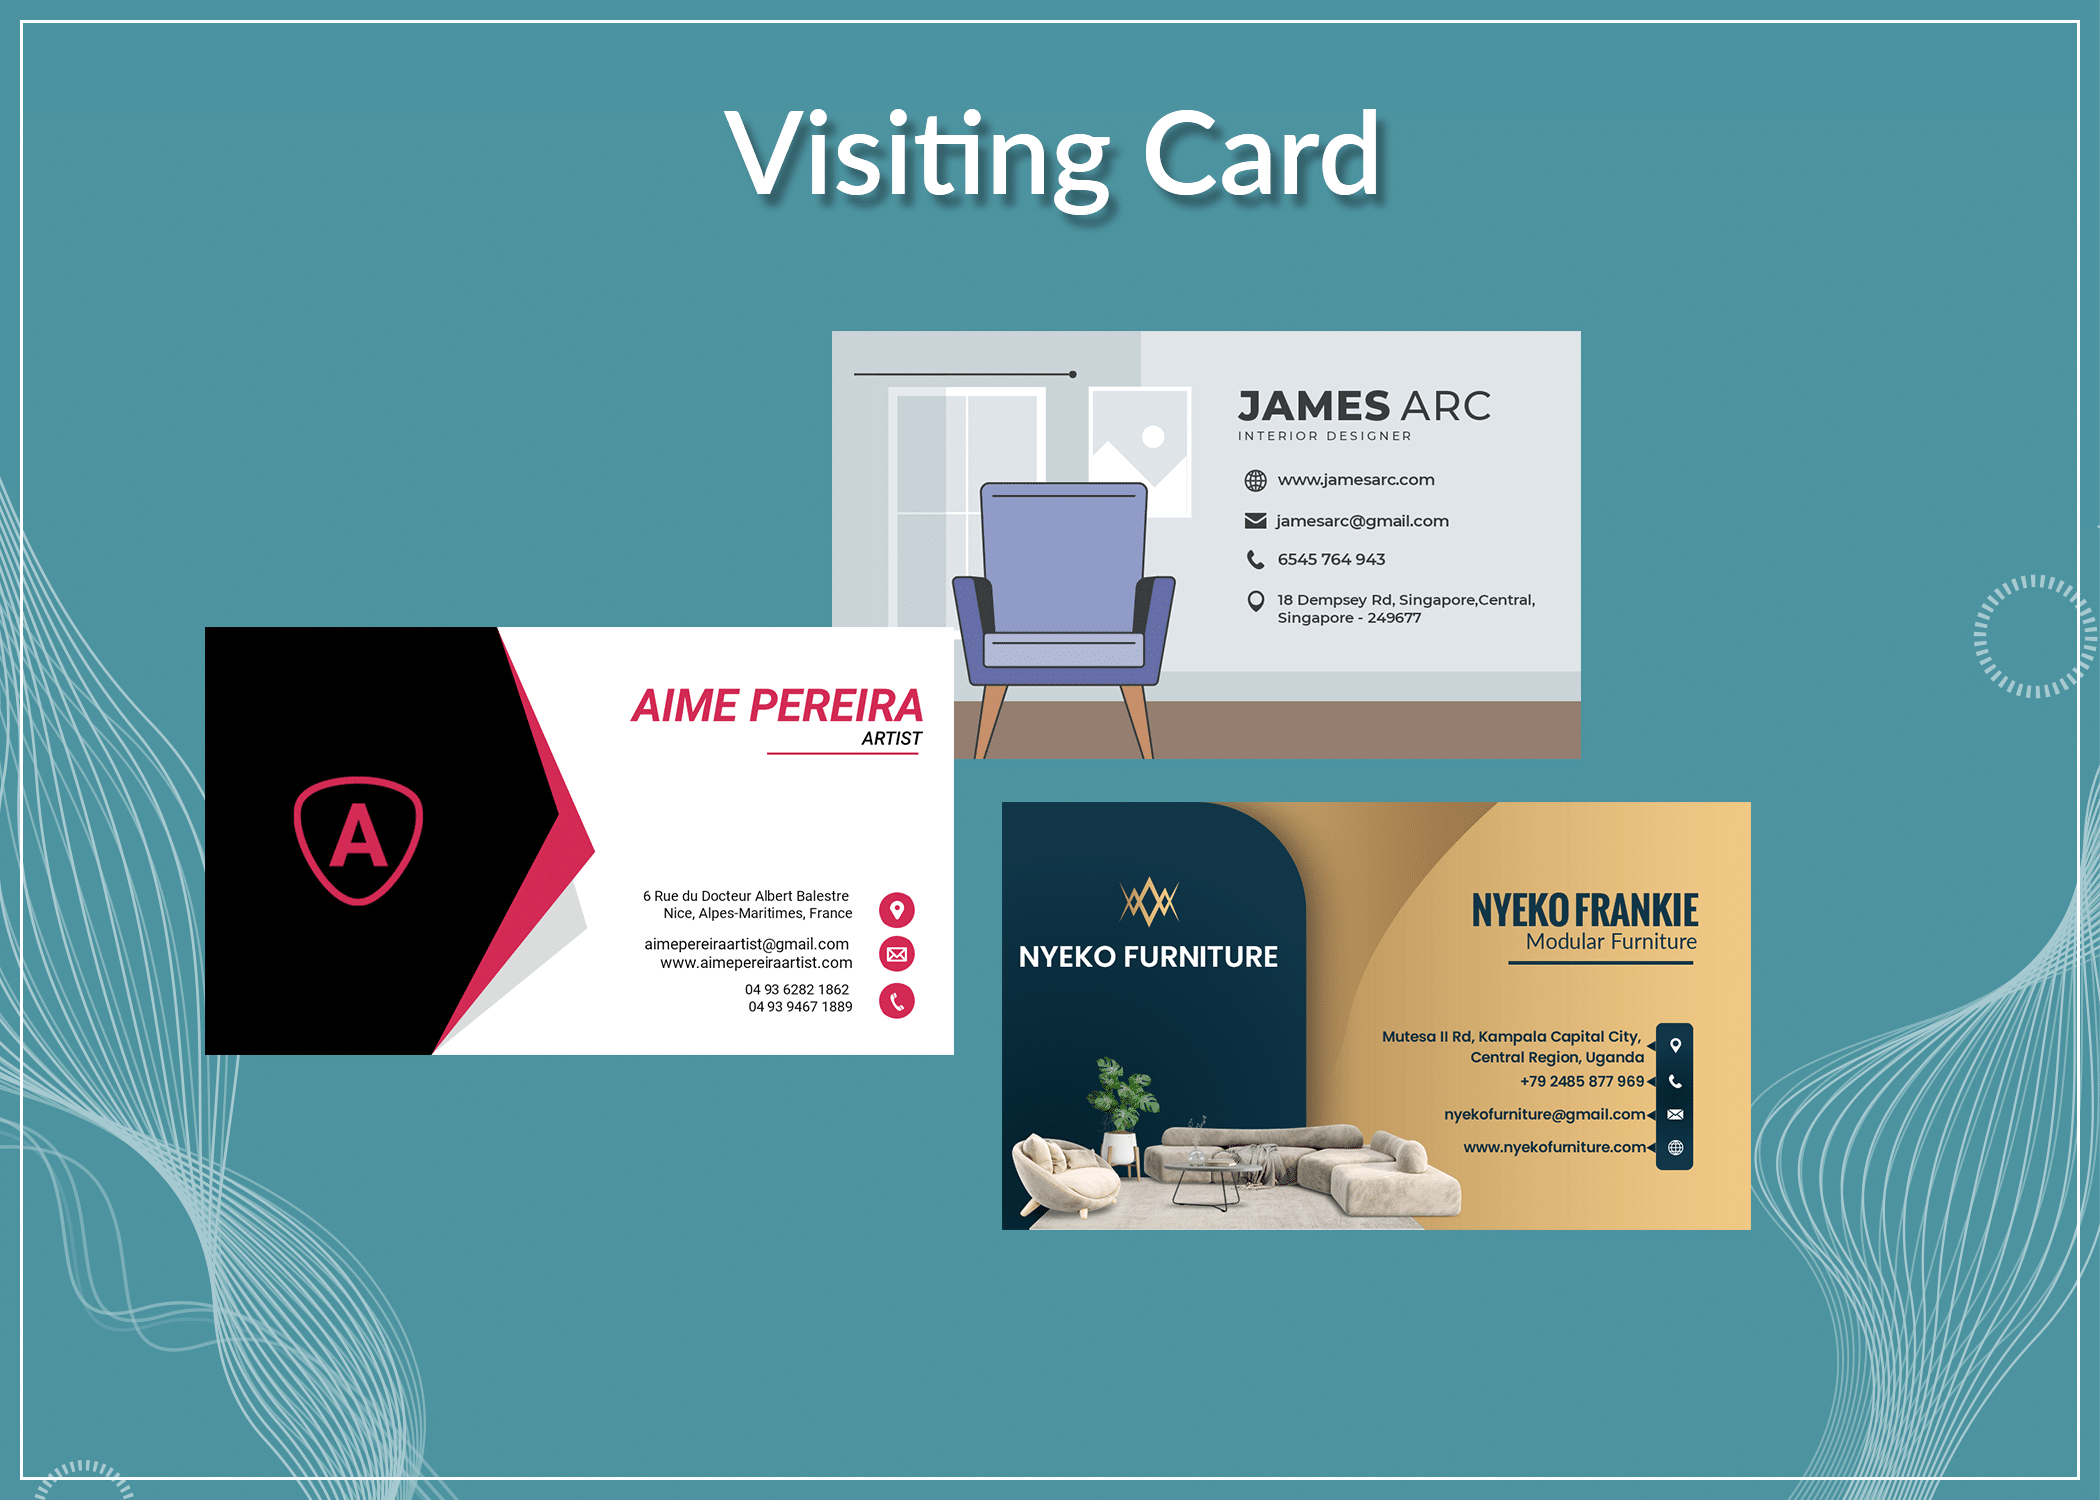 Digital Visiting Card